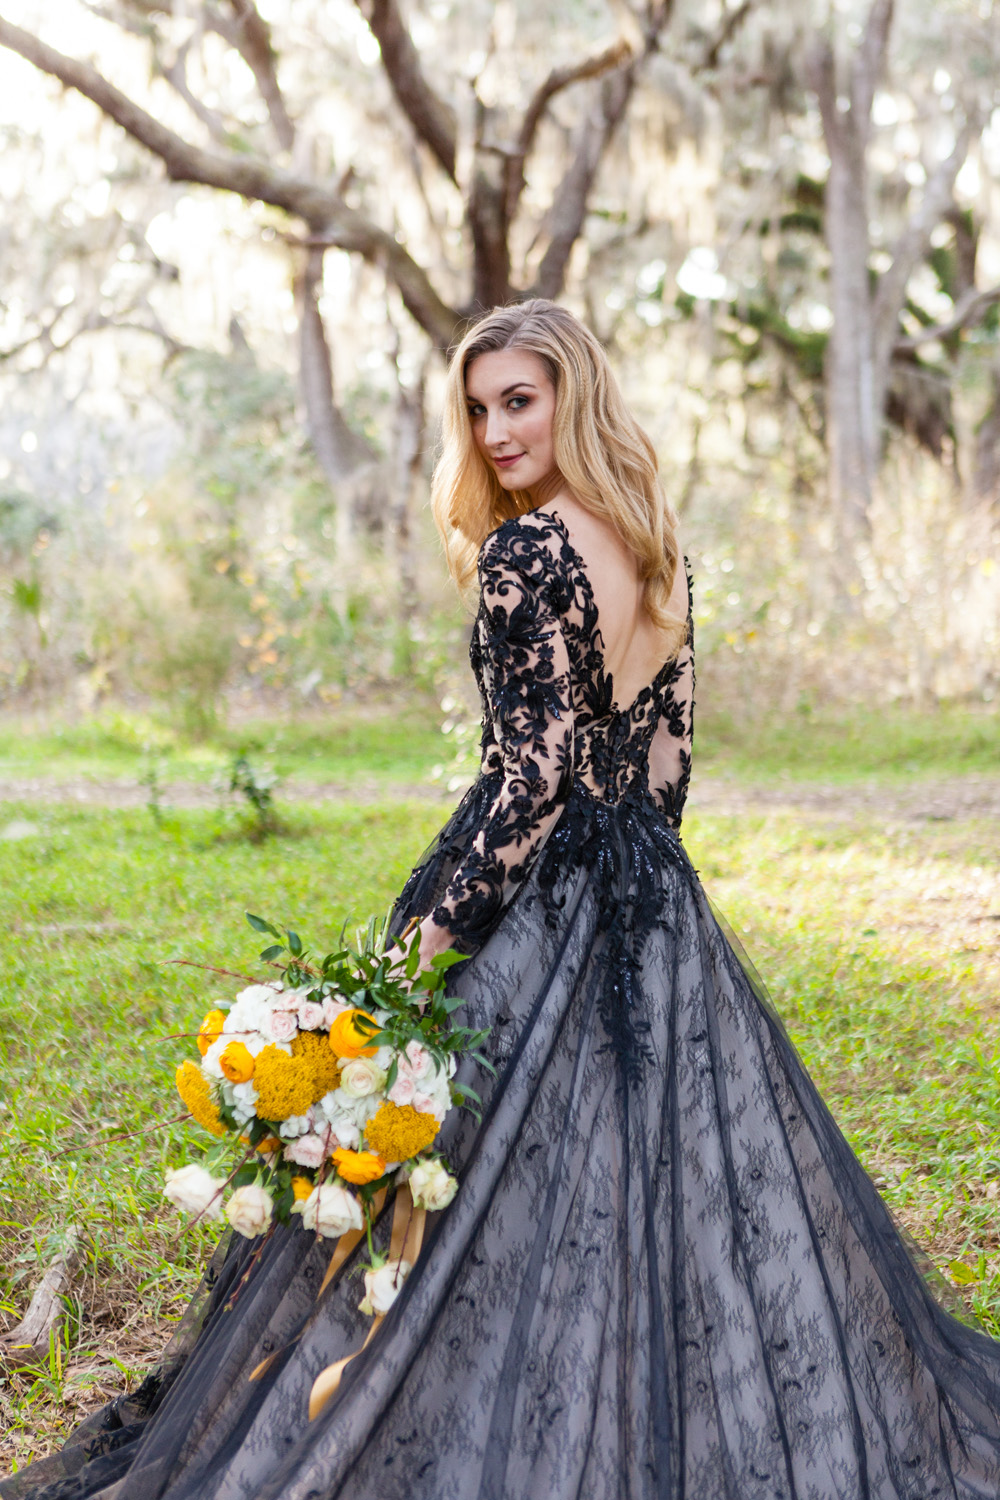  styled shoot with black wedding dress 